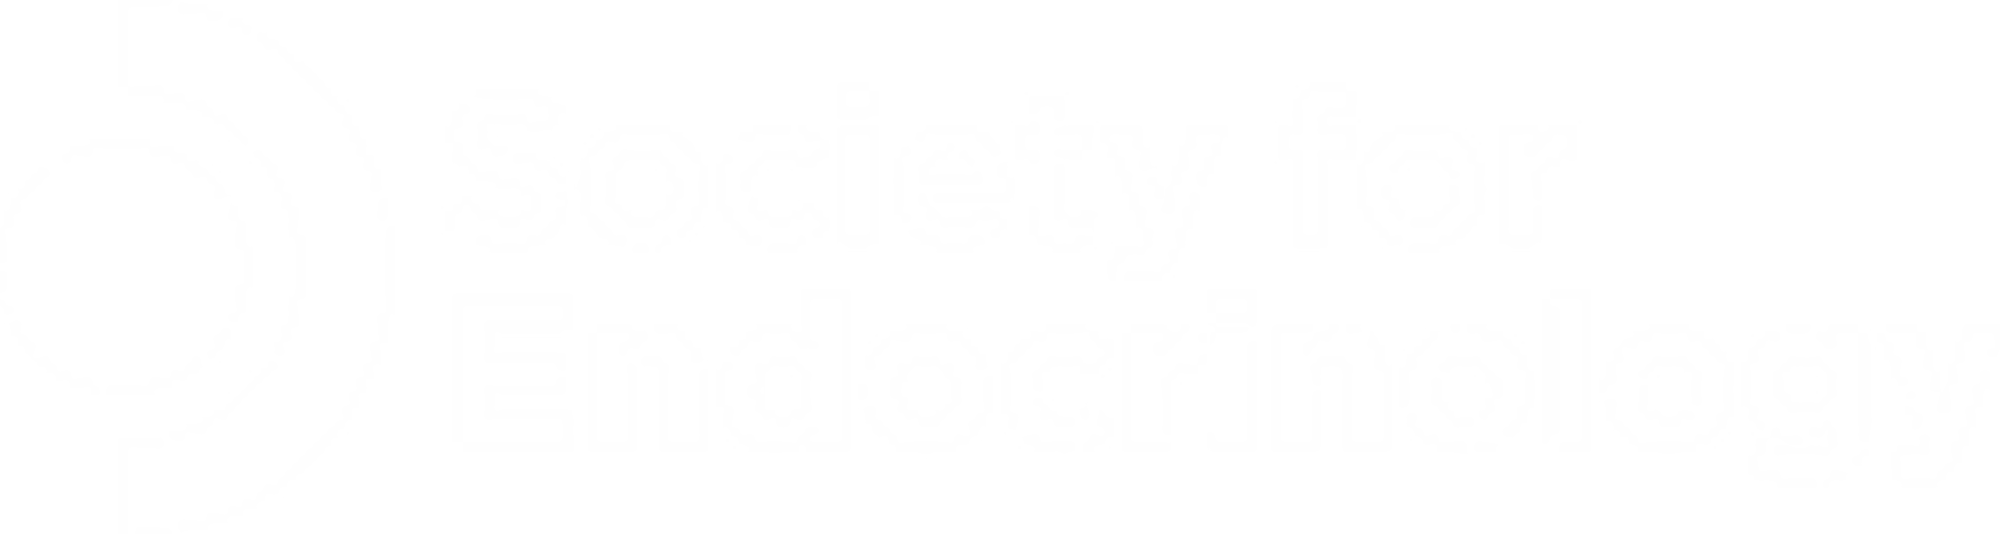 Knockout Societyforendocrinology